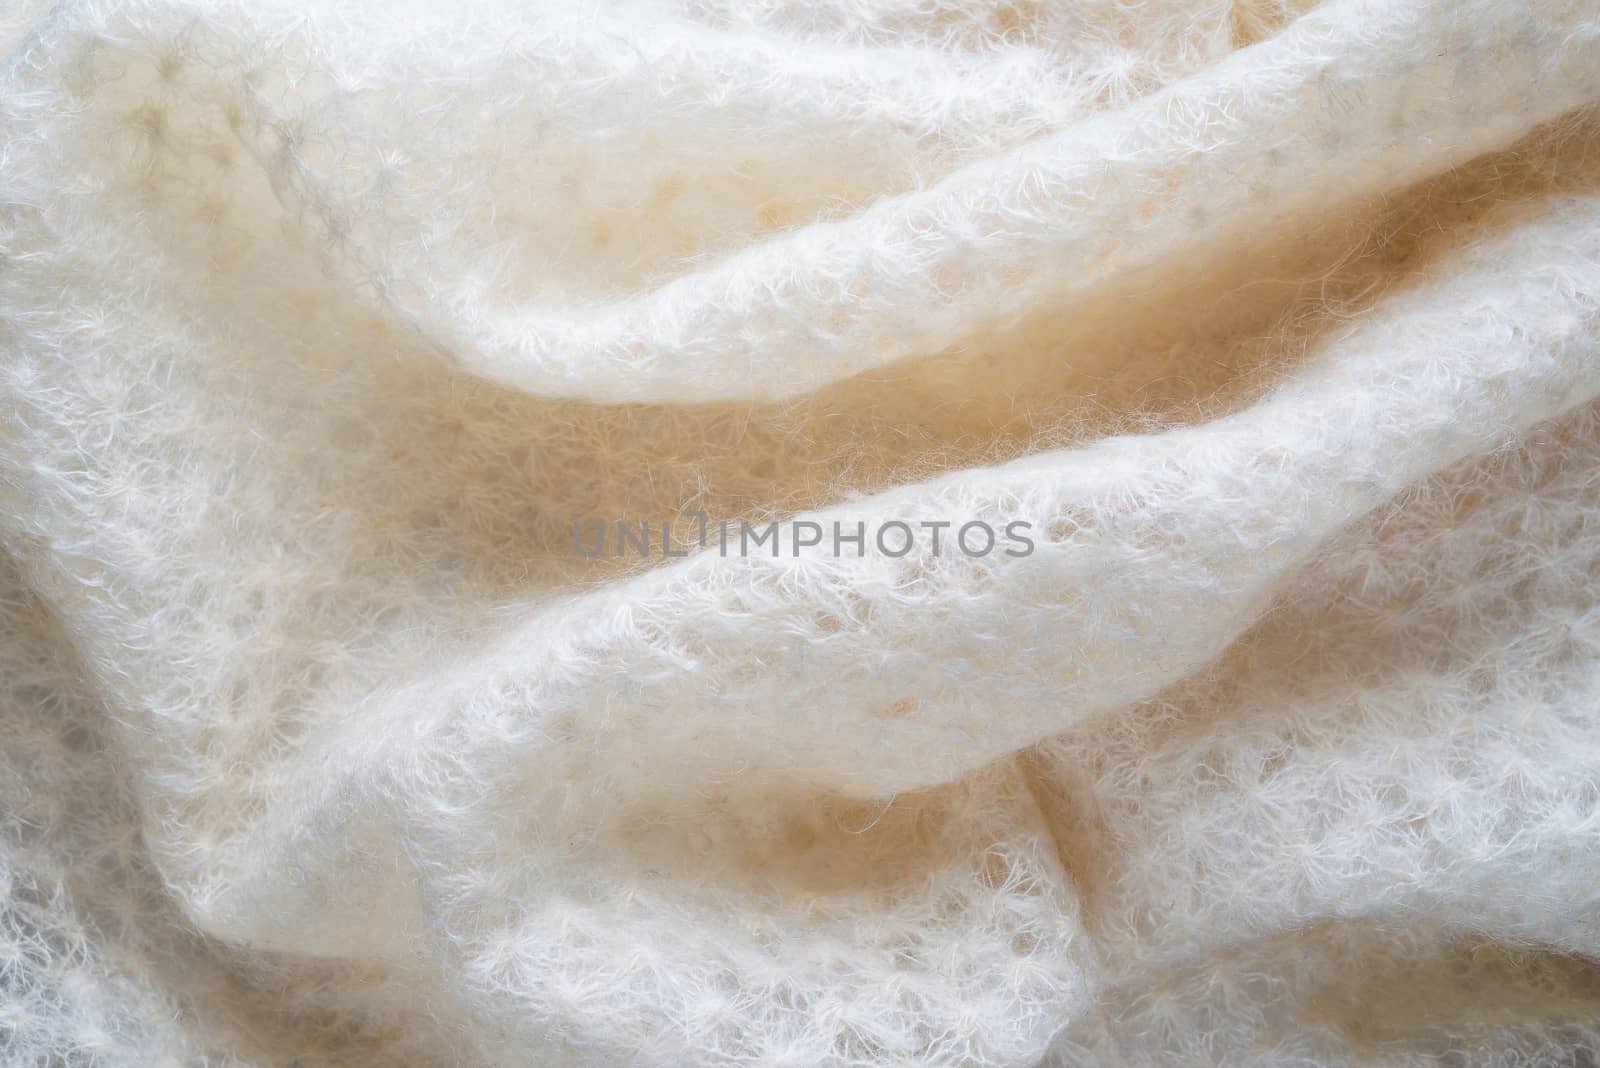 White goat fluff scarf  by MaxalTamor